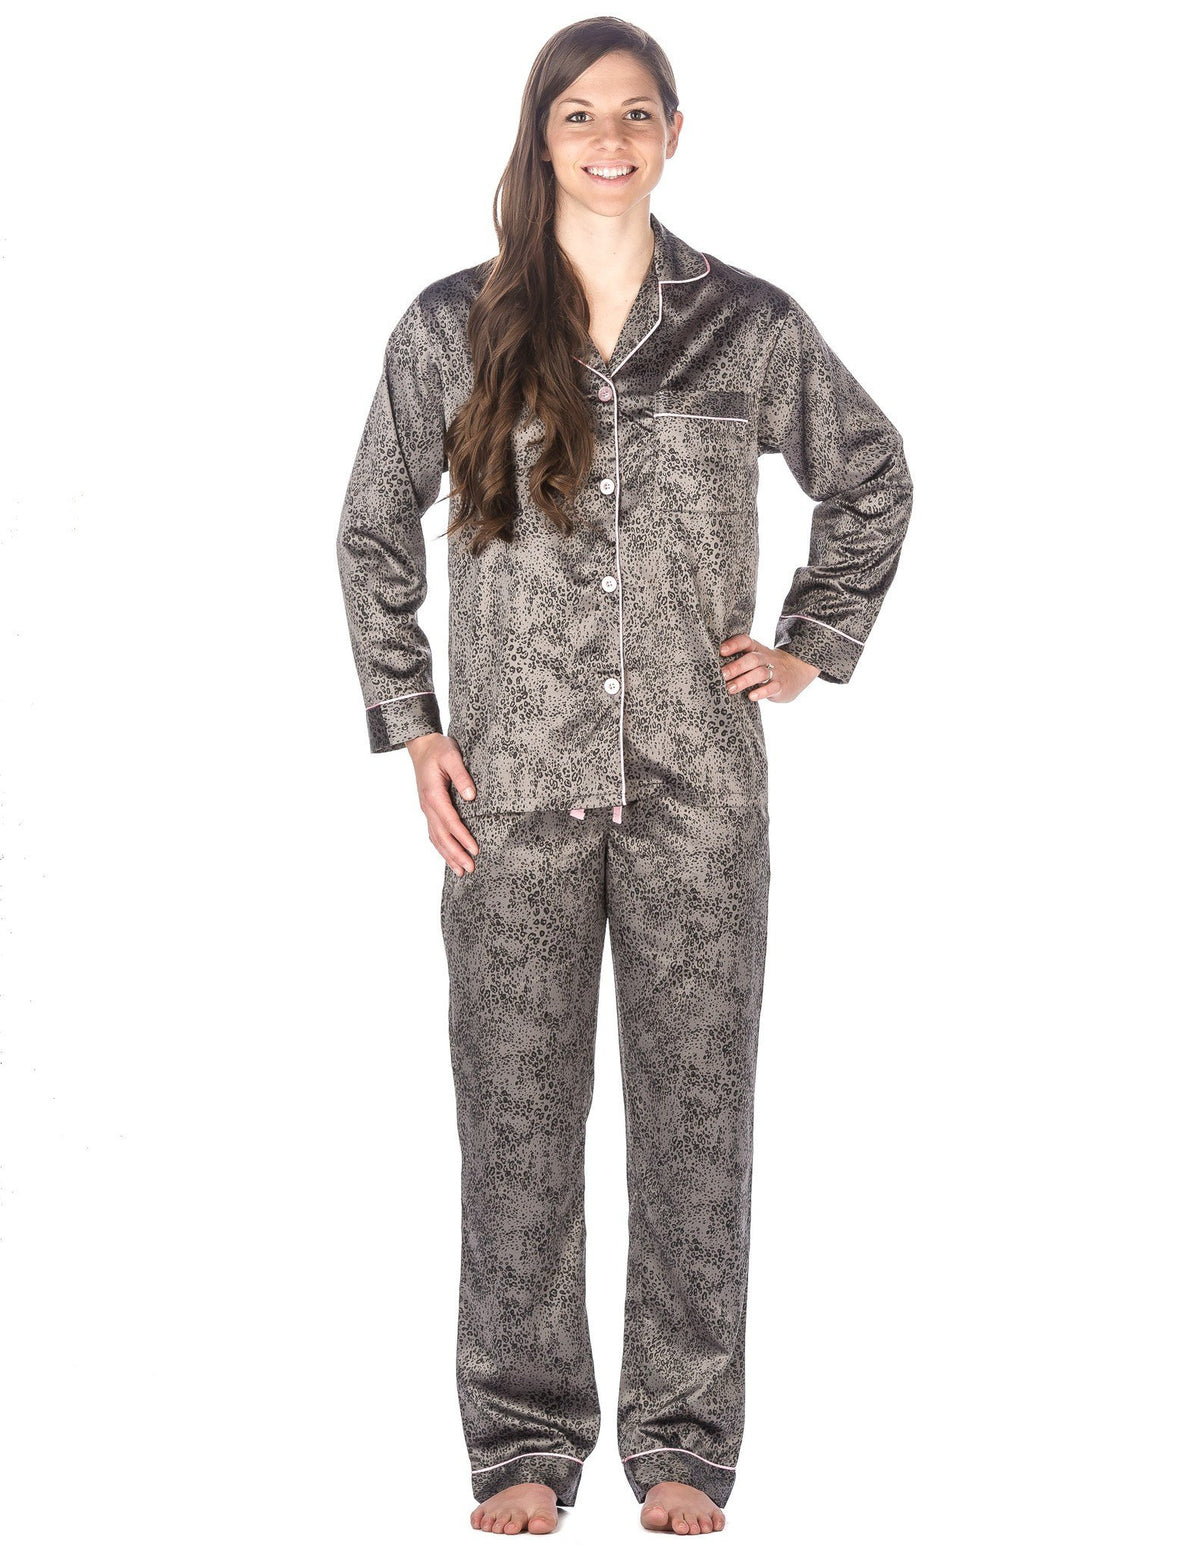 Women's Premium Satin Pajama Sleepwear Set - Leopard - Gray/Black